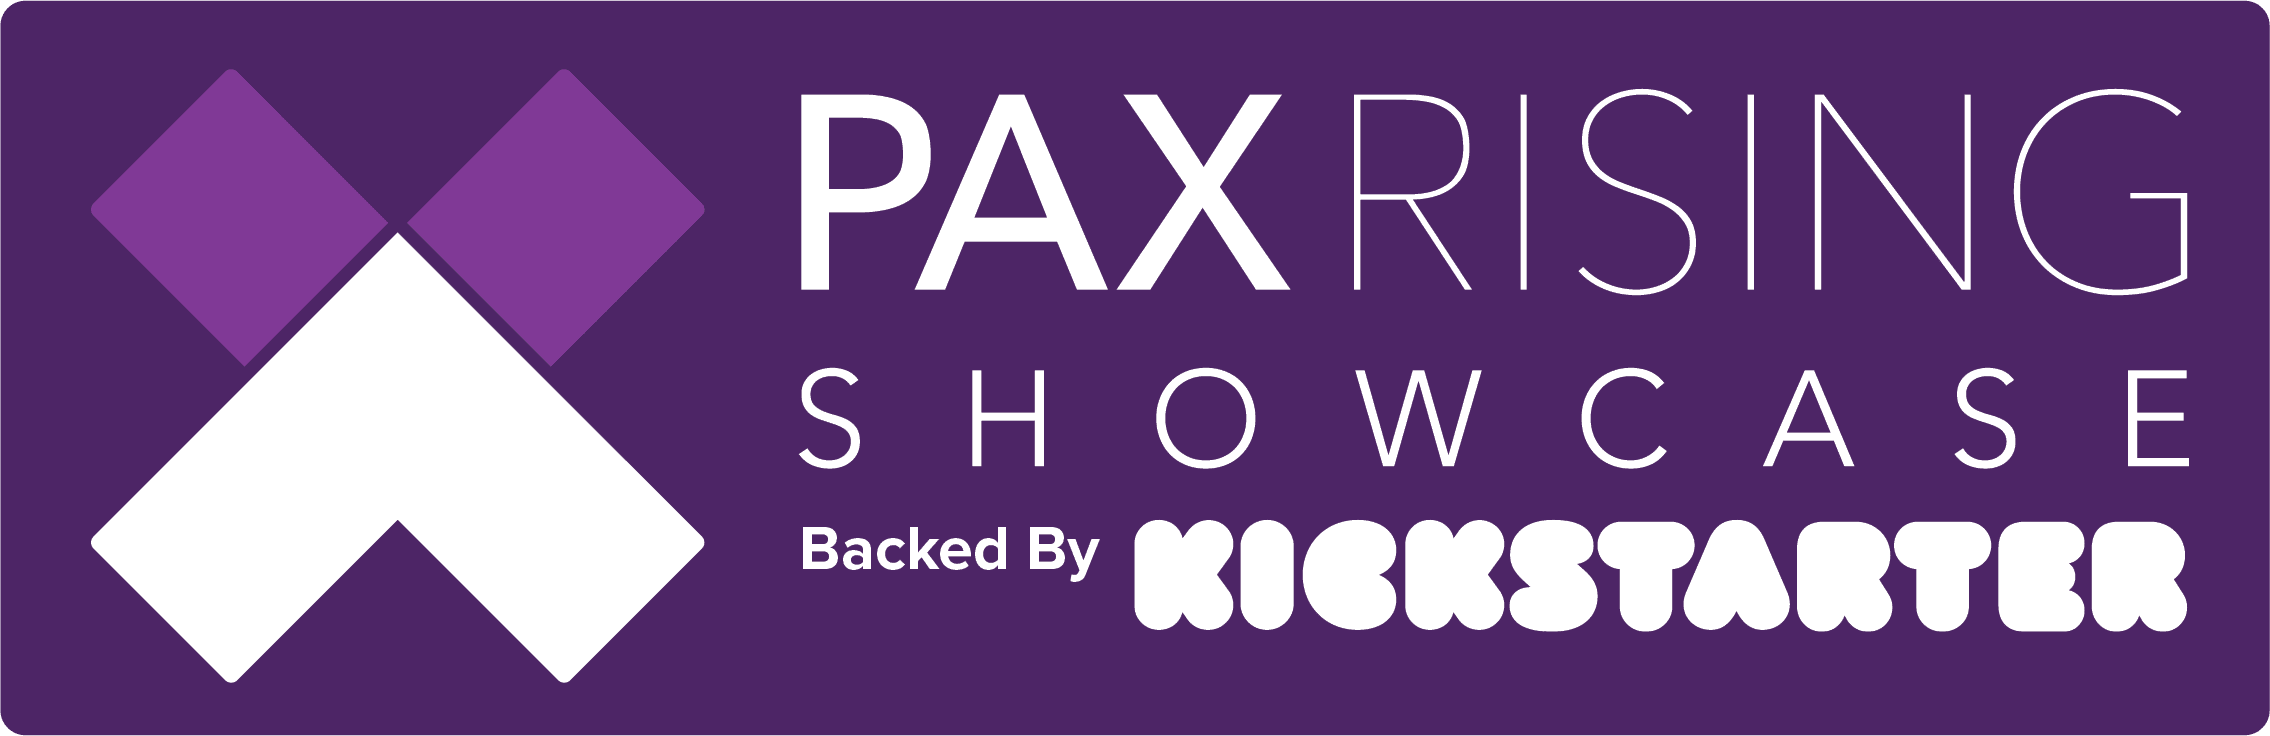 Pax Rising Showcase